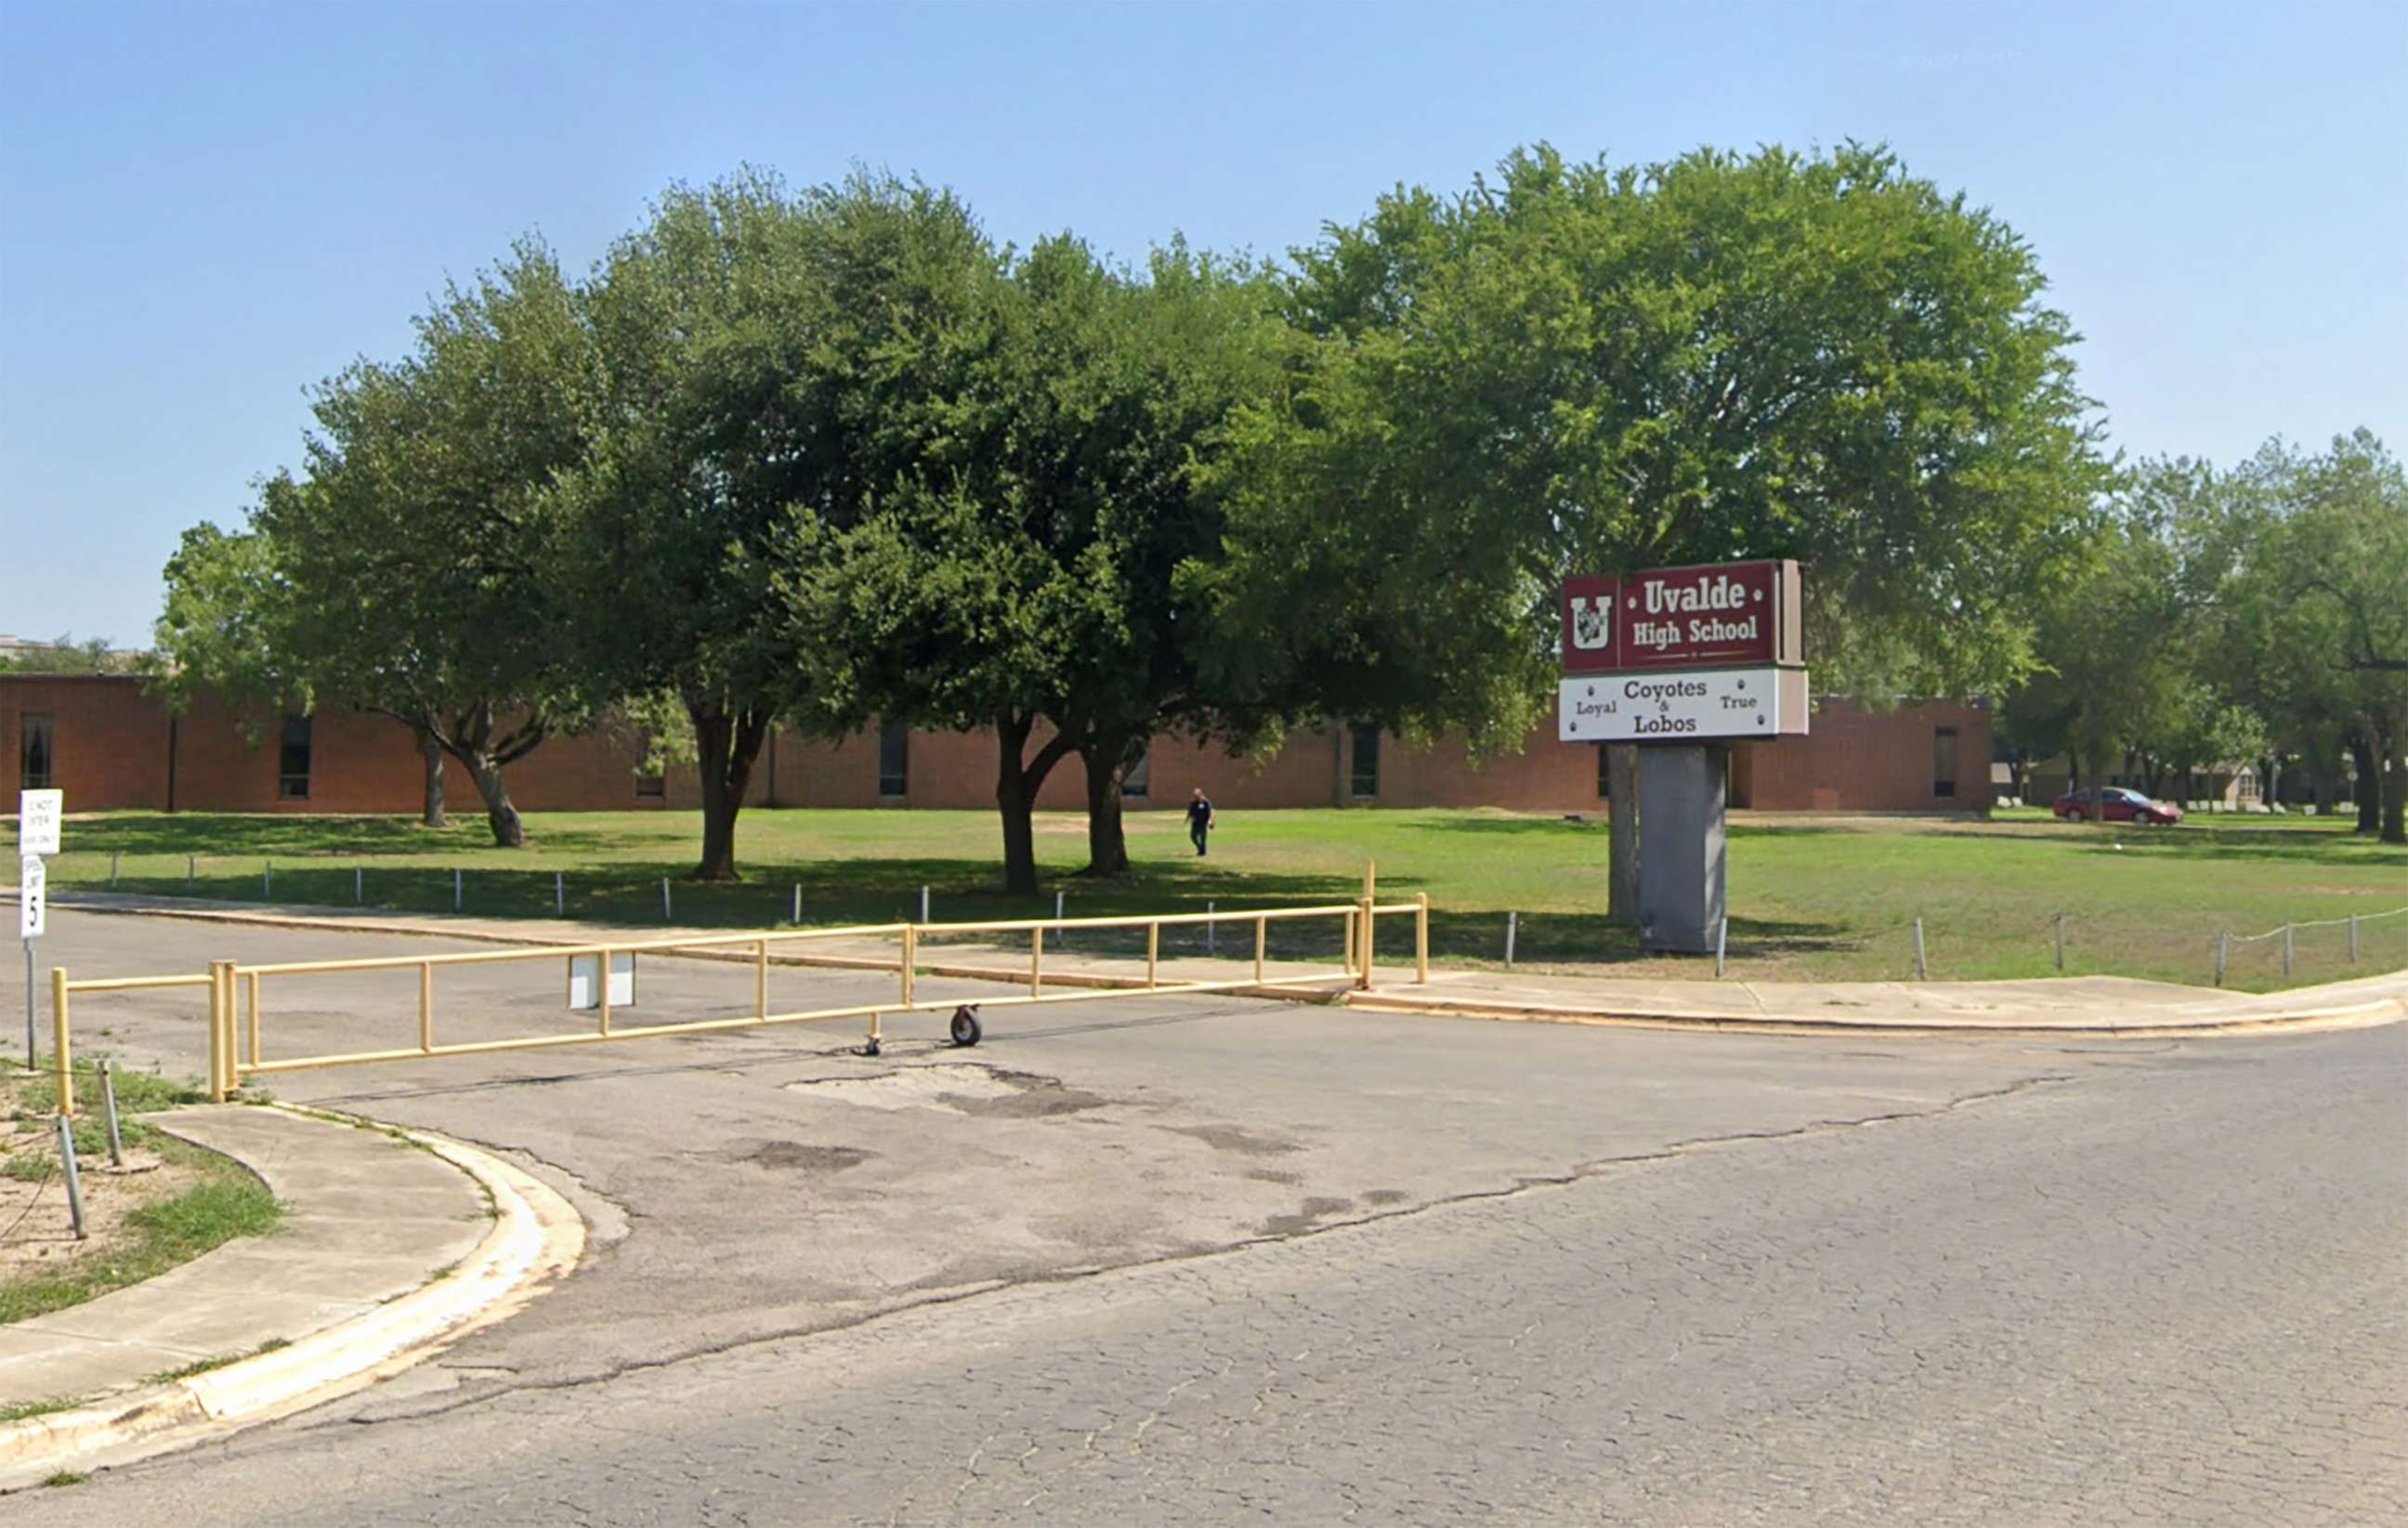 PHOTO: Uvalde High School in Uvalde, Texas, in 2022 image from Google Street View.